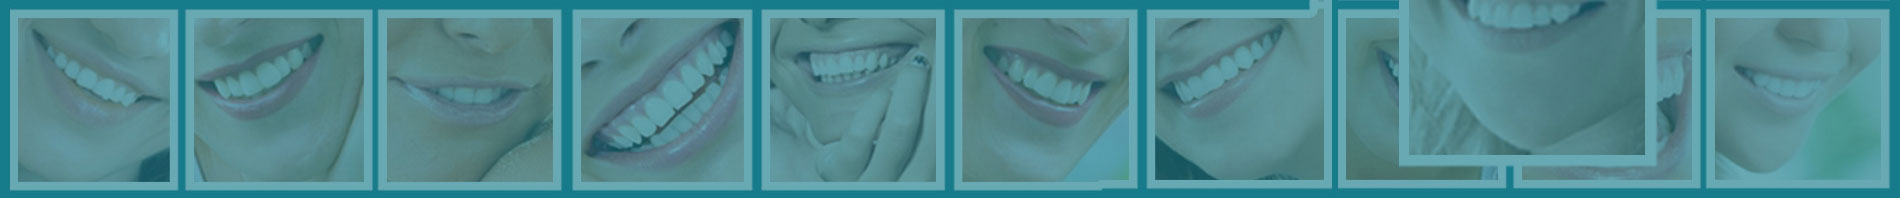 Megawhite Express Teeth Whitening - About Us